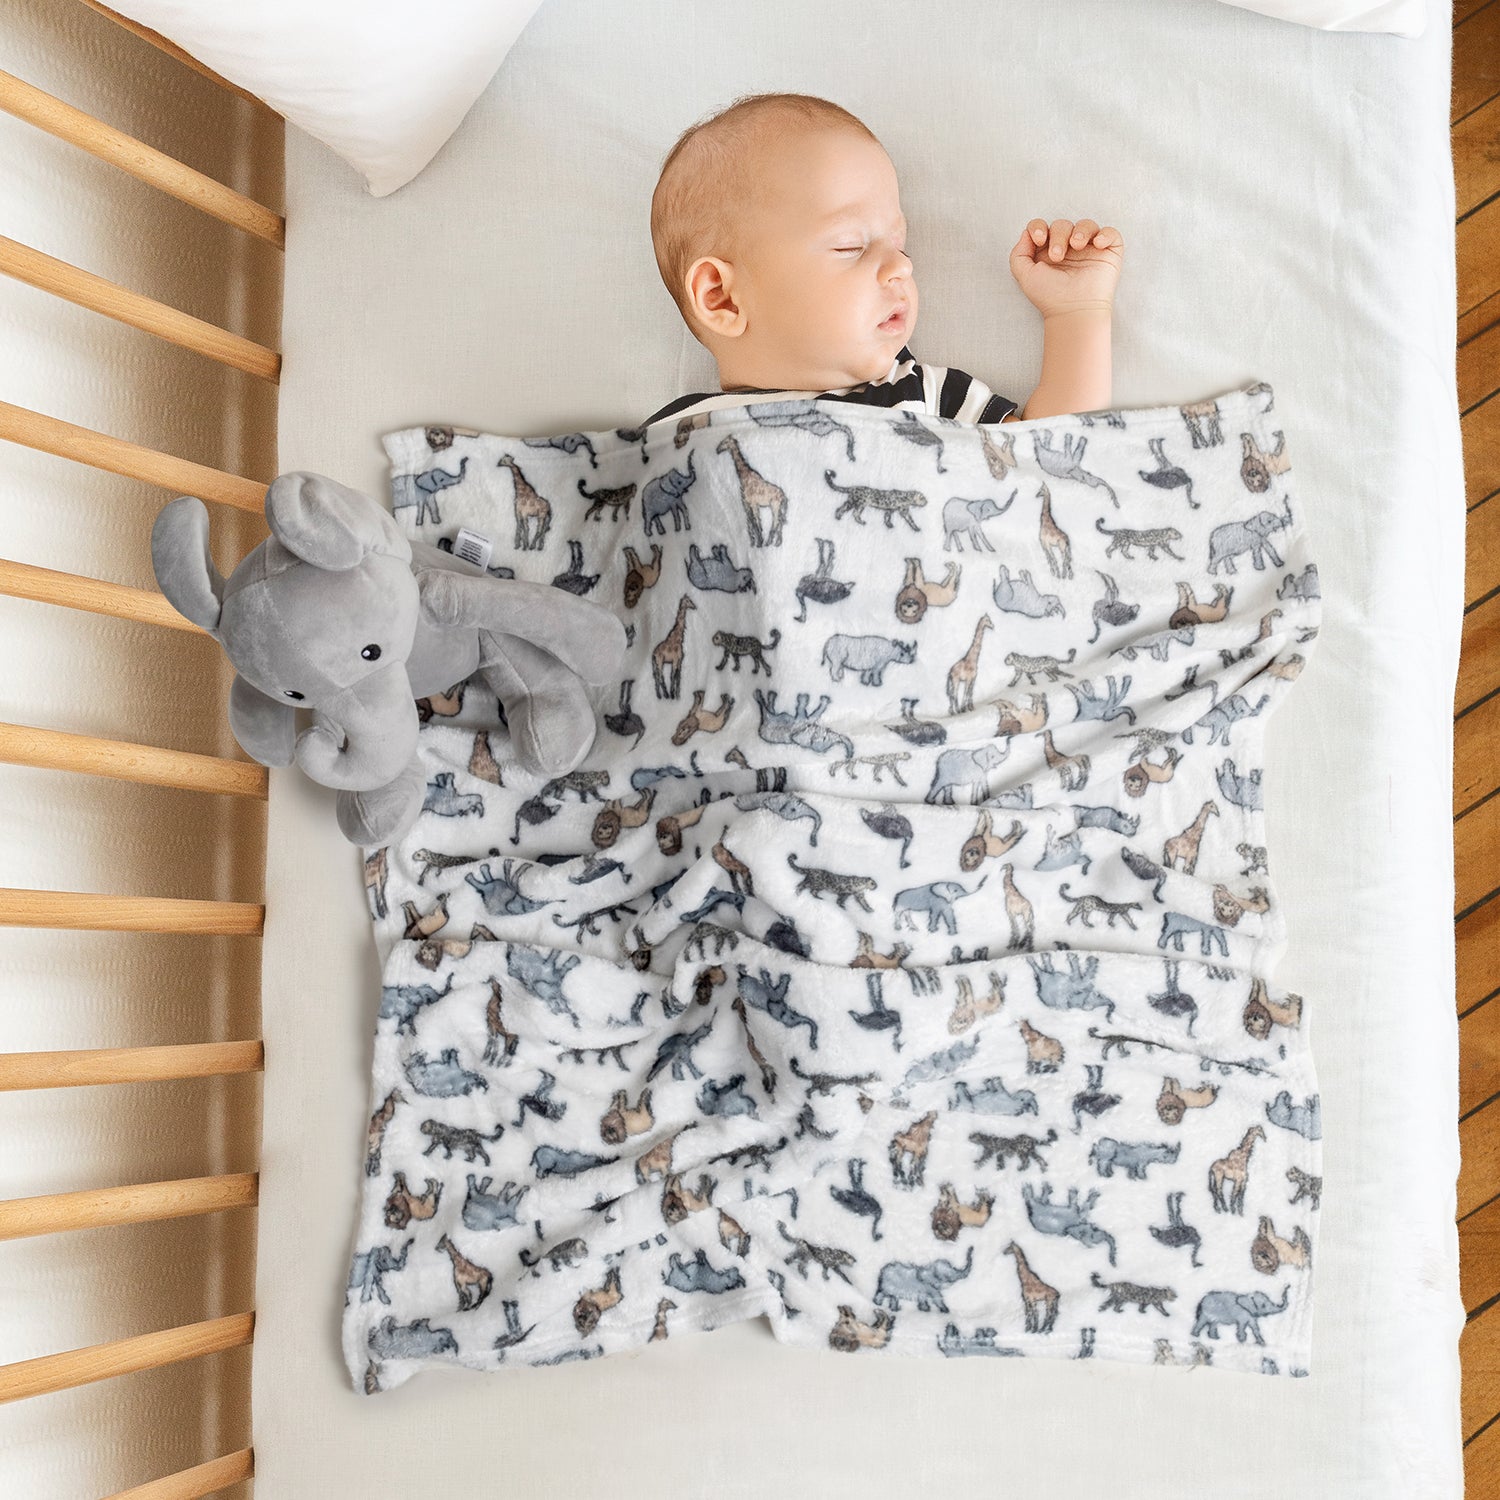 Baby Moo Elephant Snuggle Buddy Soft Rattle and Plush Blanket Gift Toy Blanket - Grey